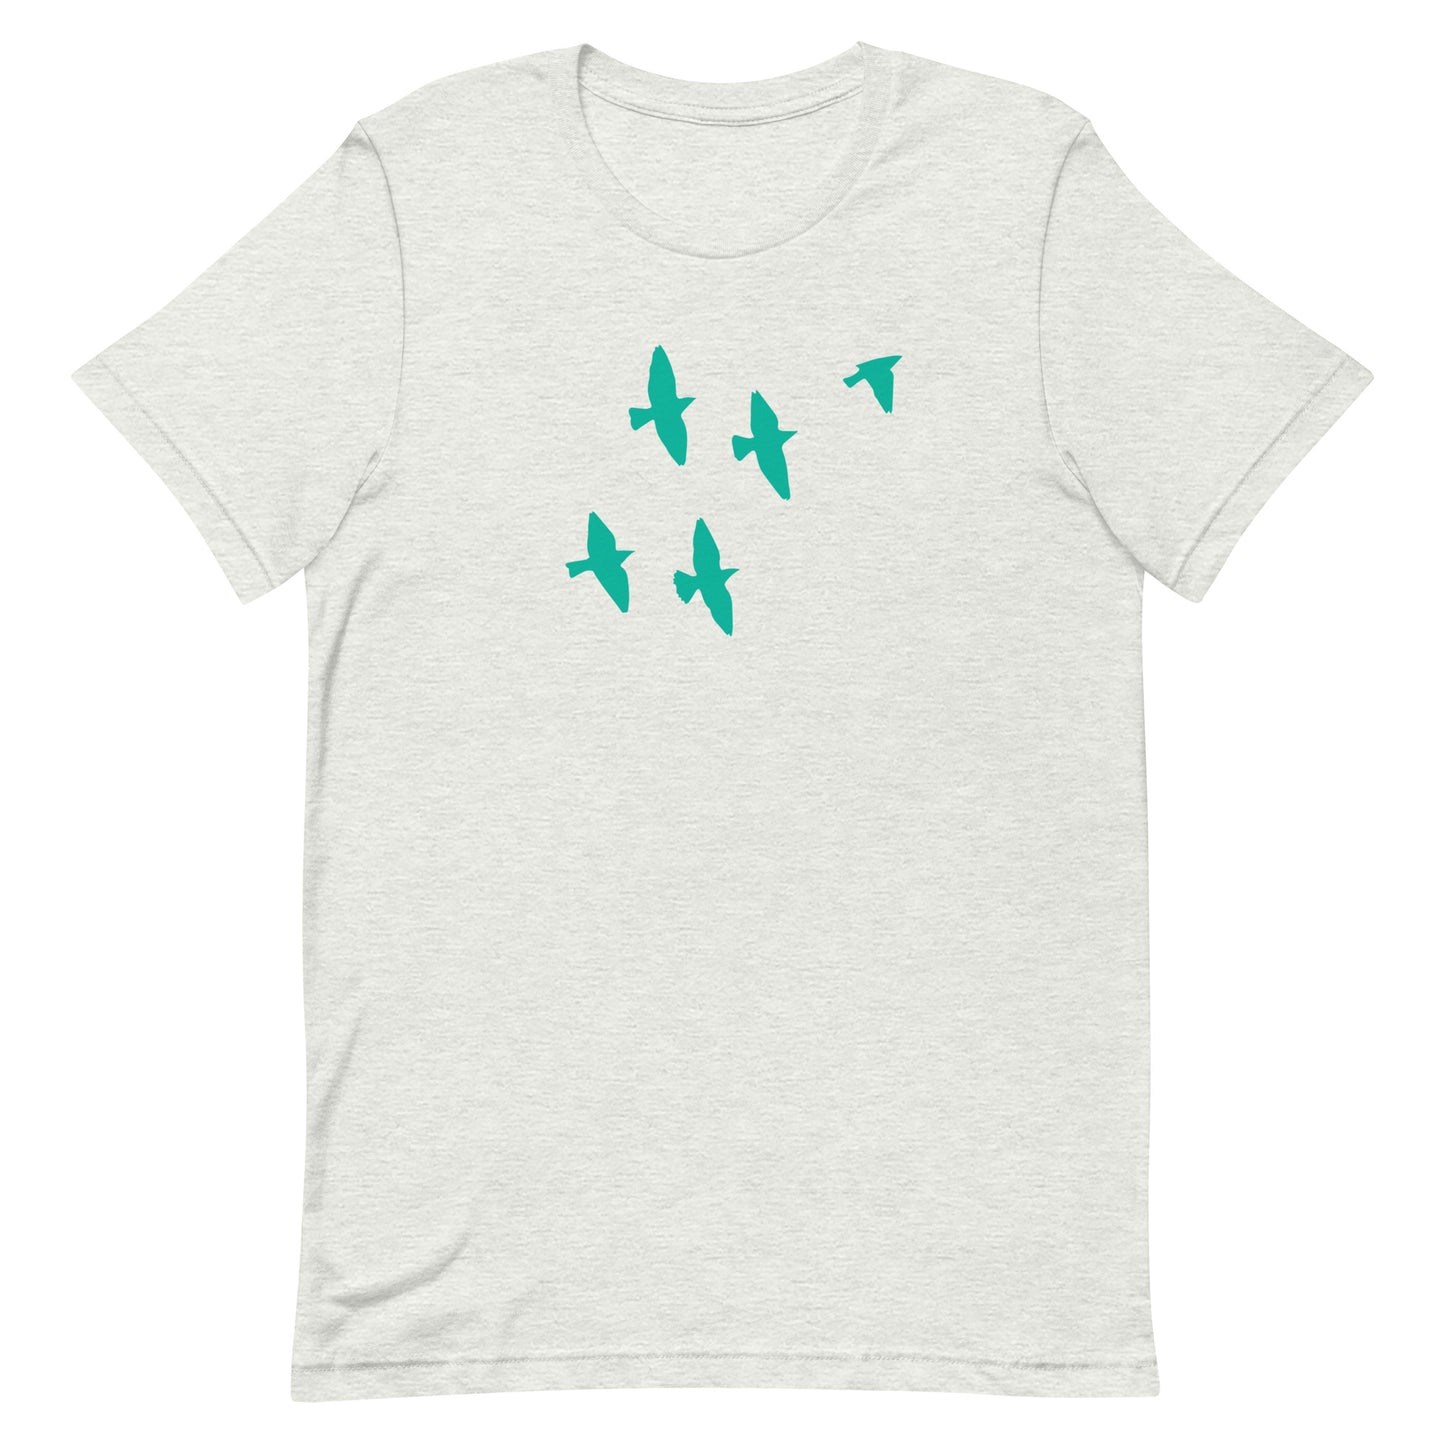 Green Birds In Flight Tee